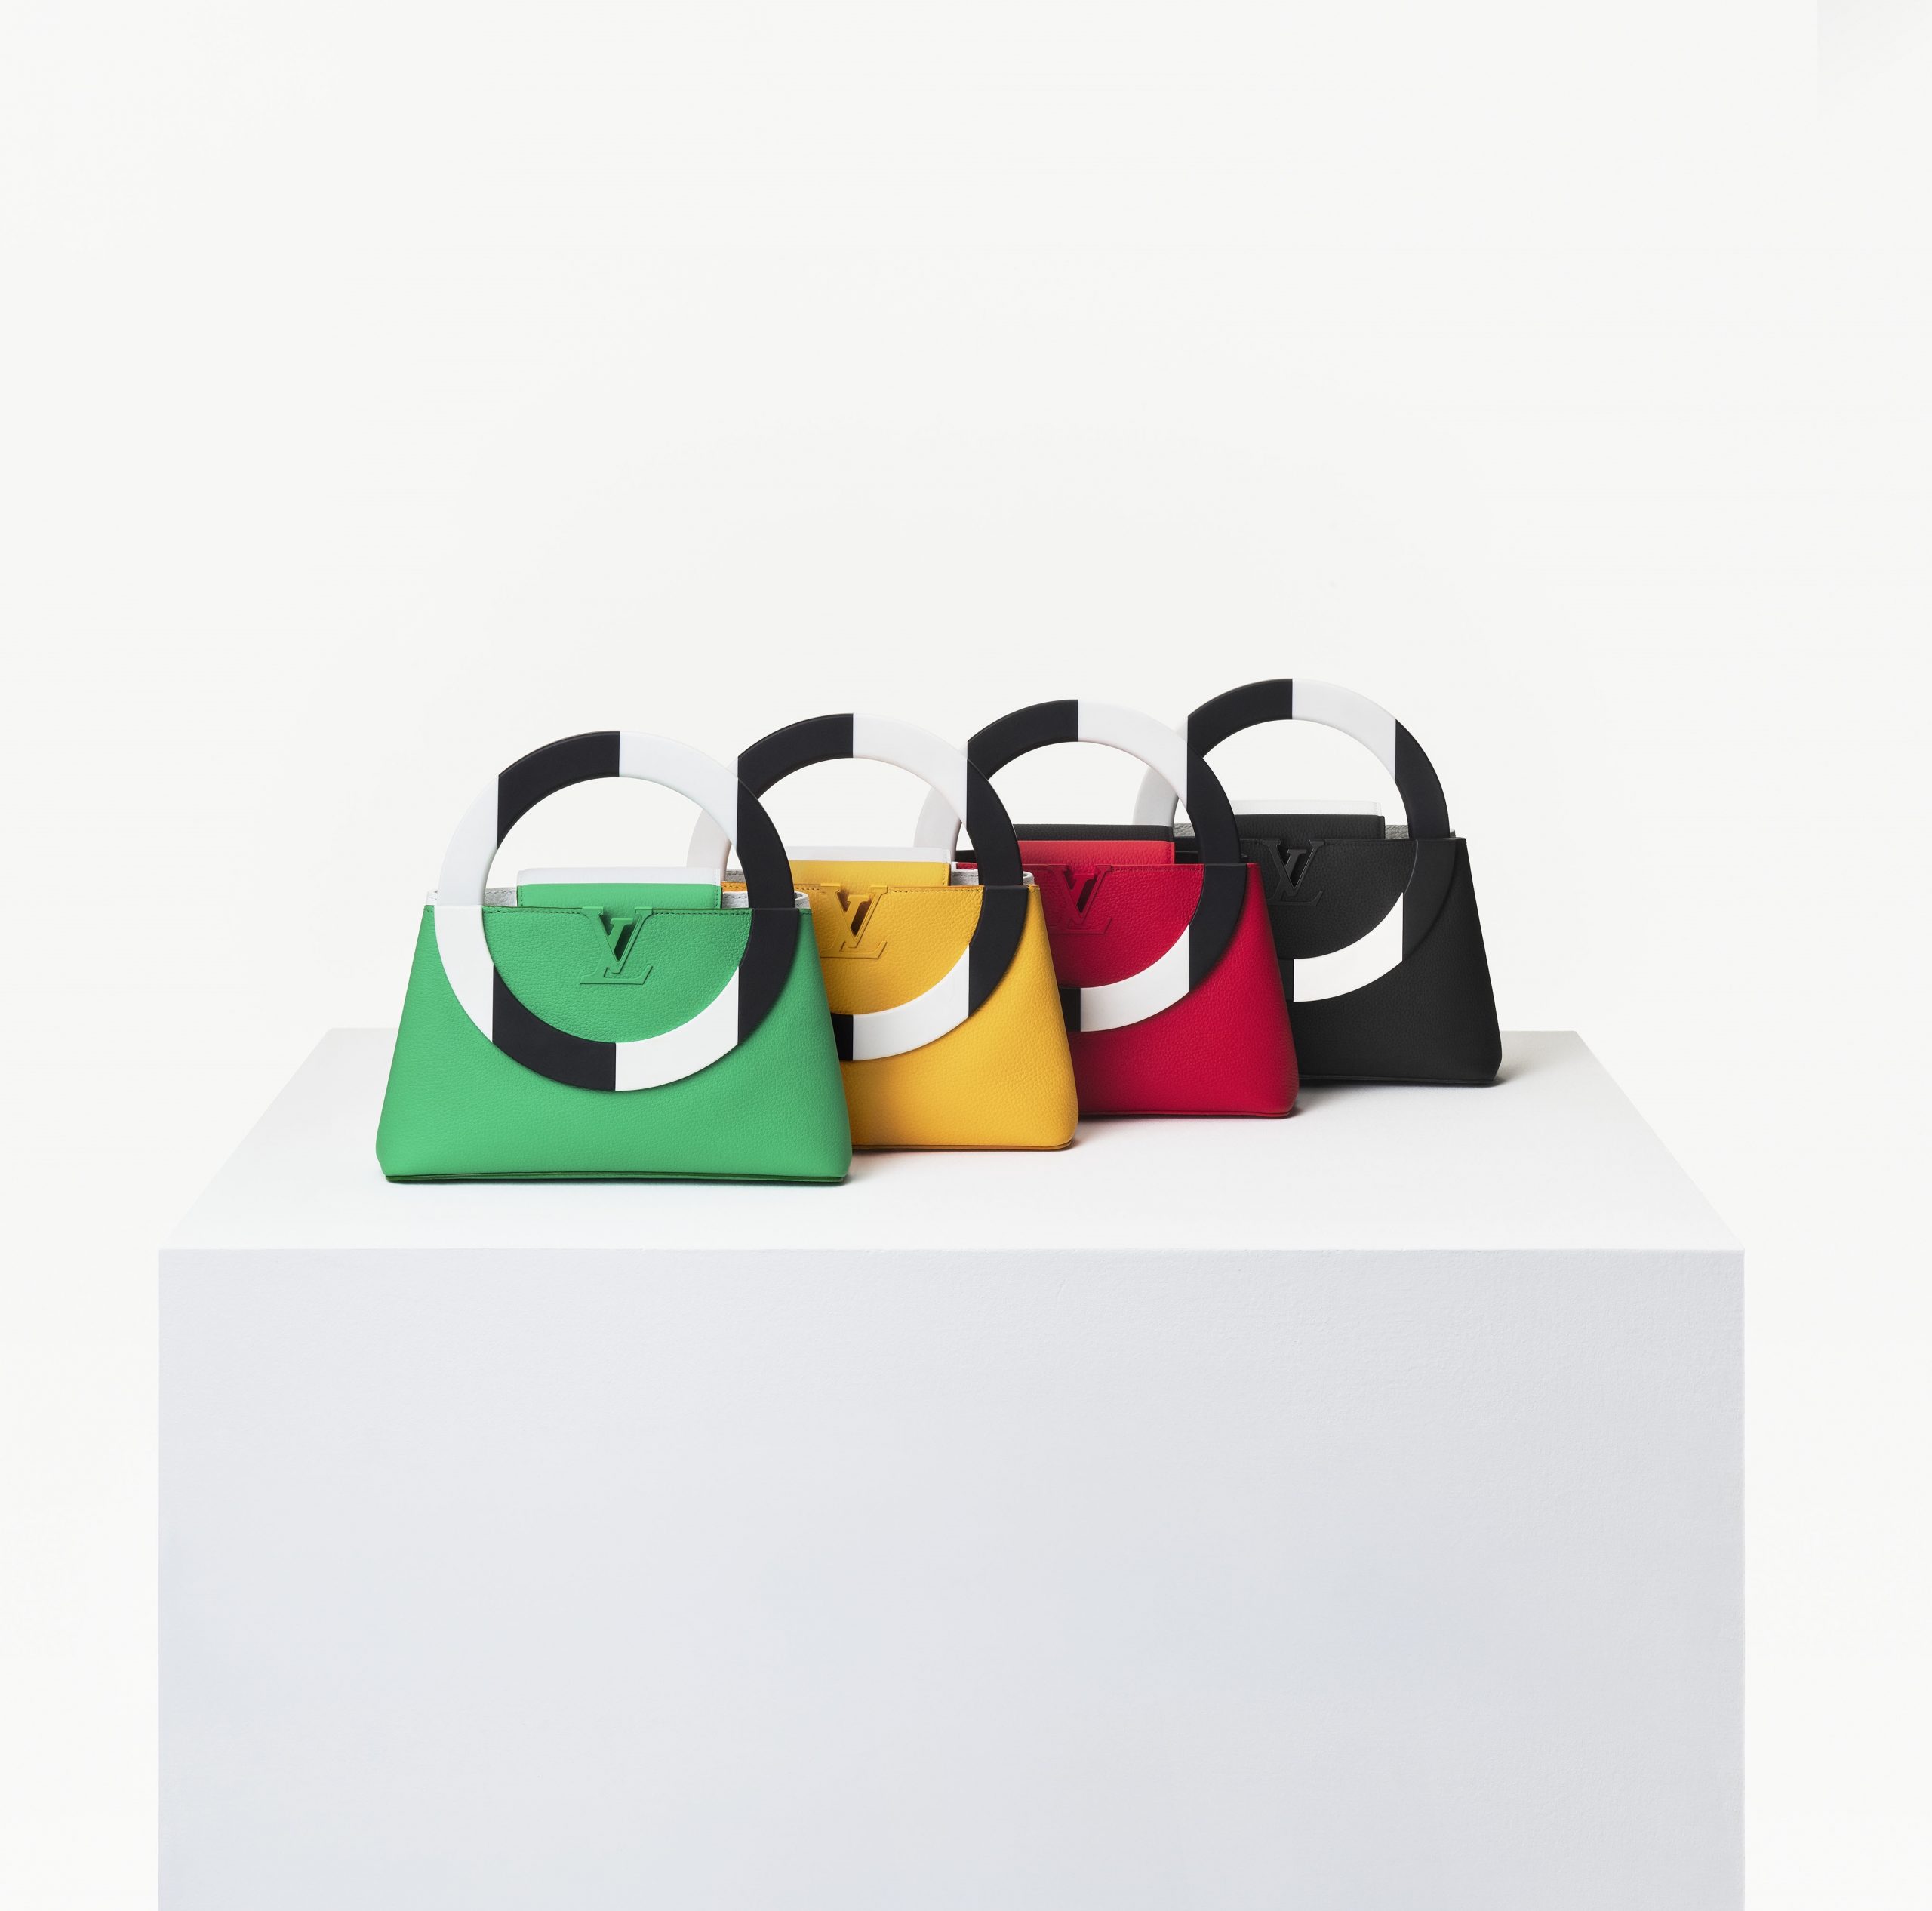 Louis Vuitton Proposed a New Interpretation of the Capucines Bag